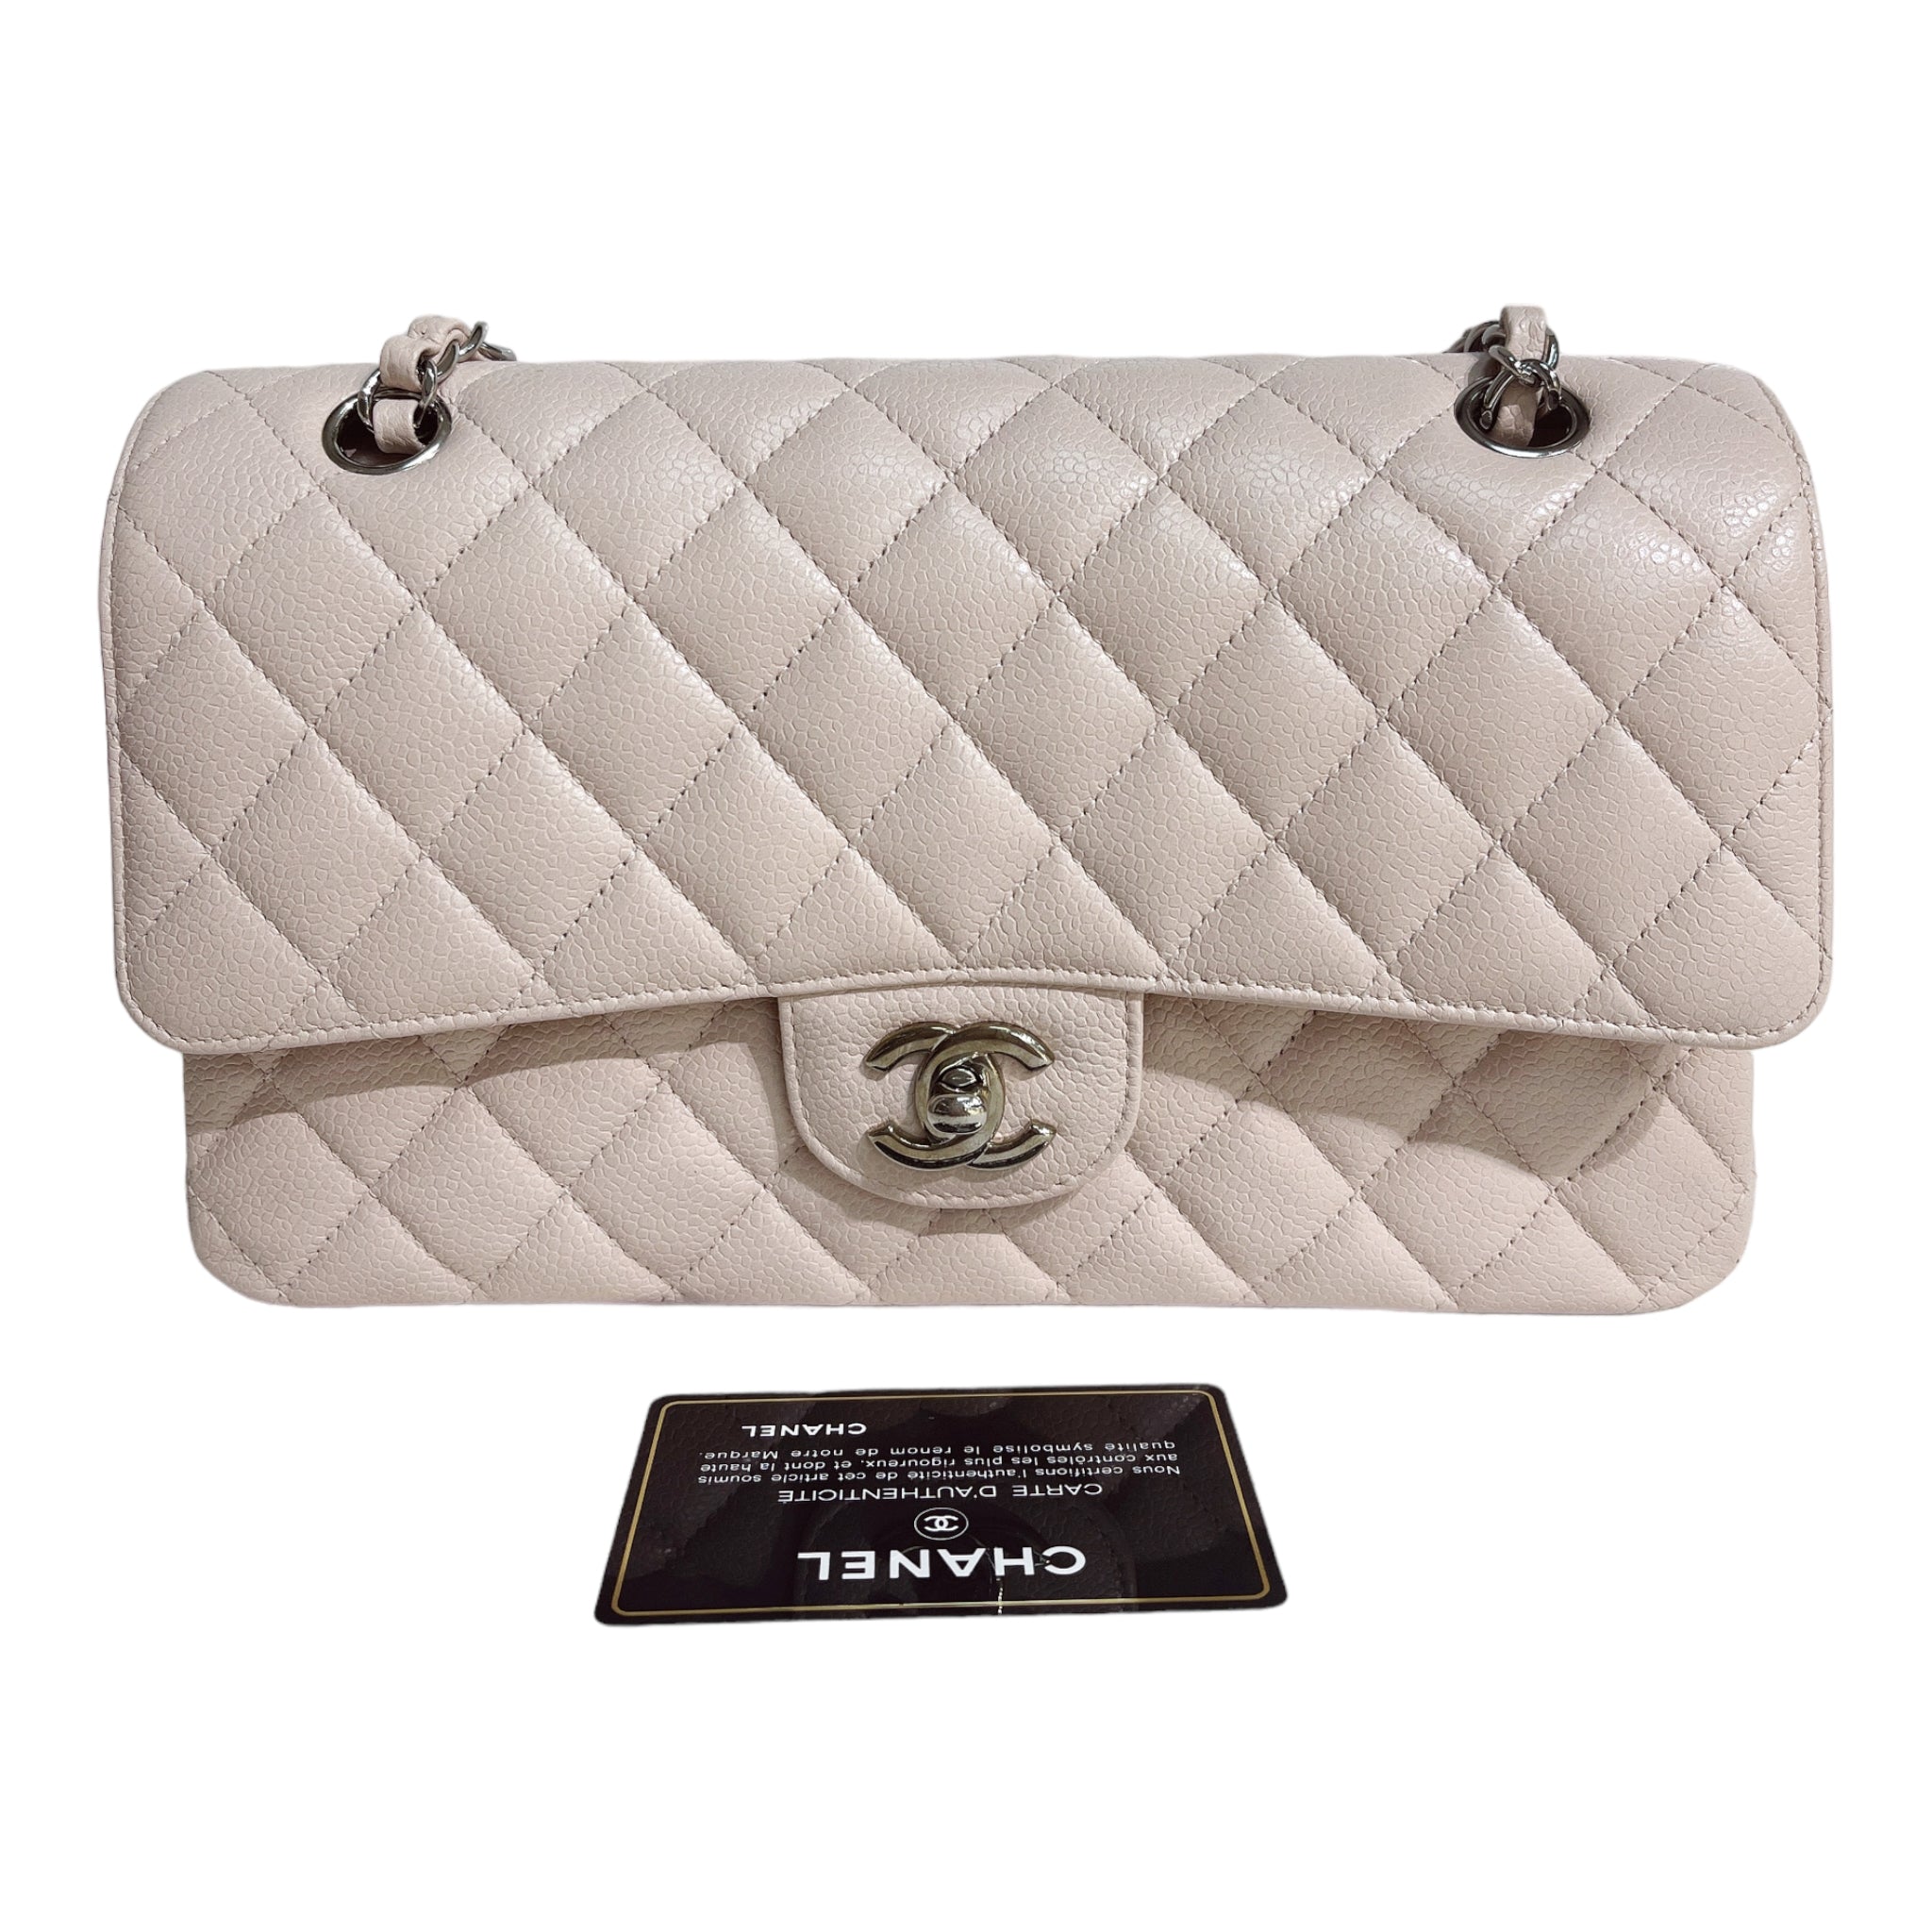 Brand New In Box Chanel Pink Medium Classic Flap Bag  eBay